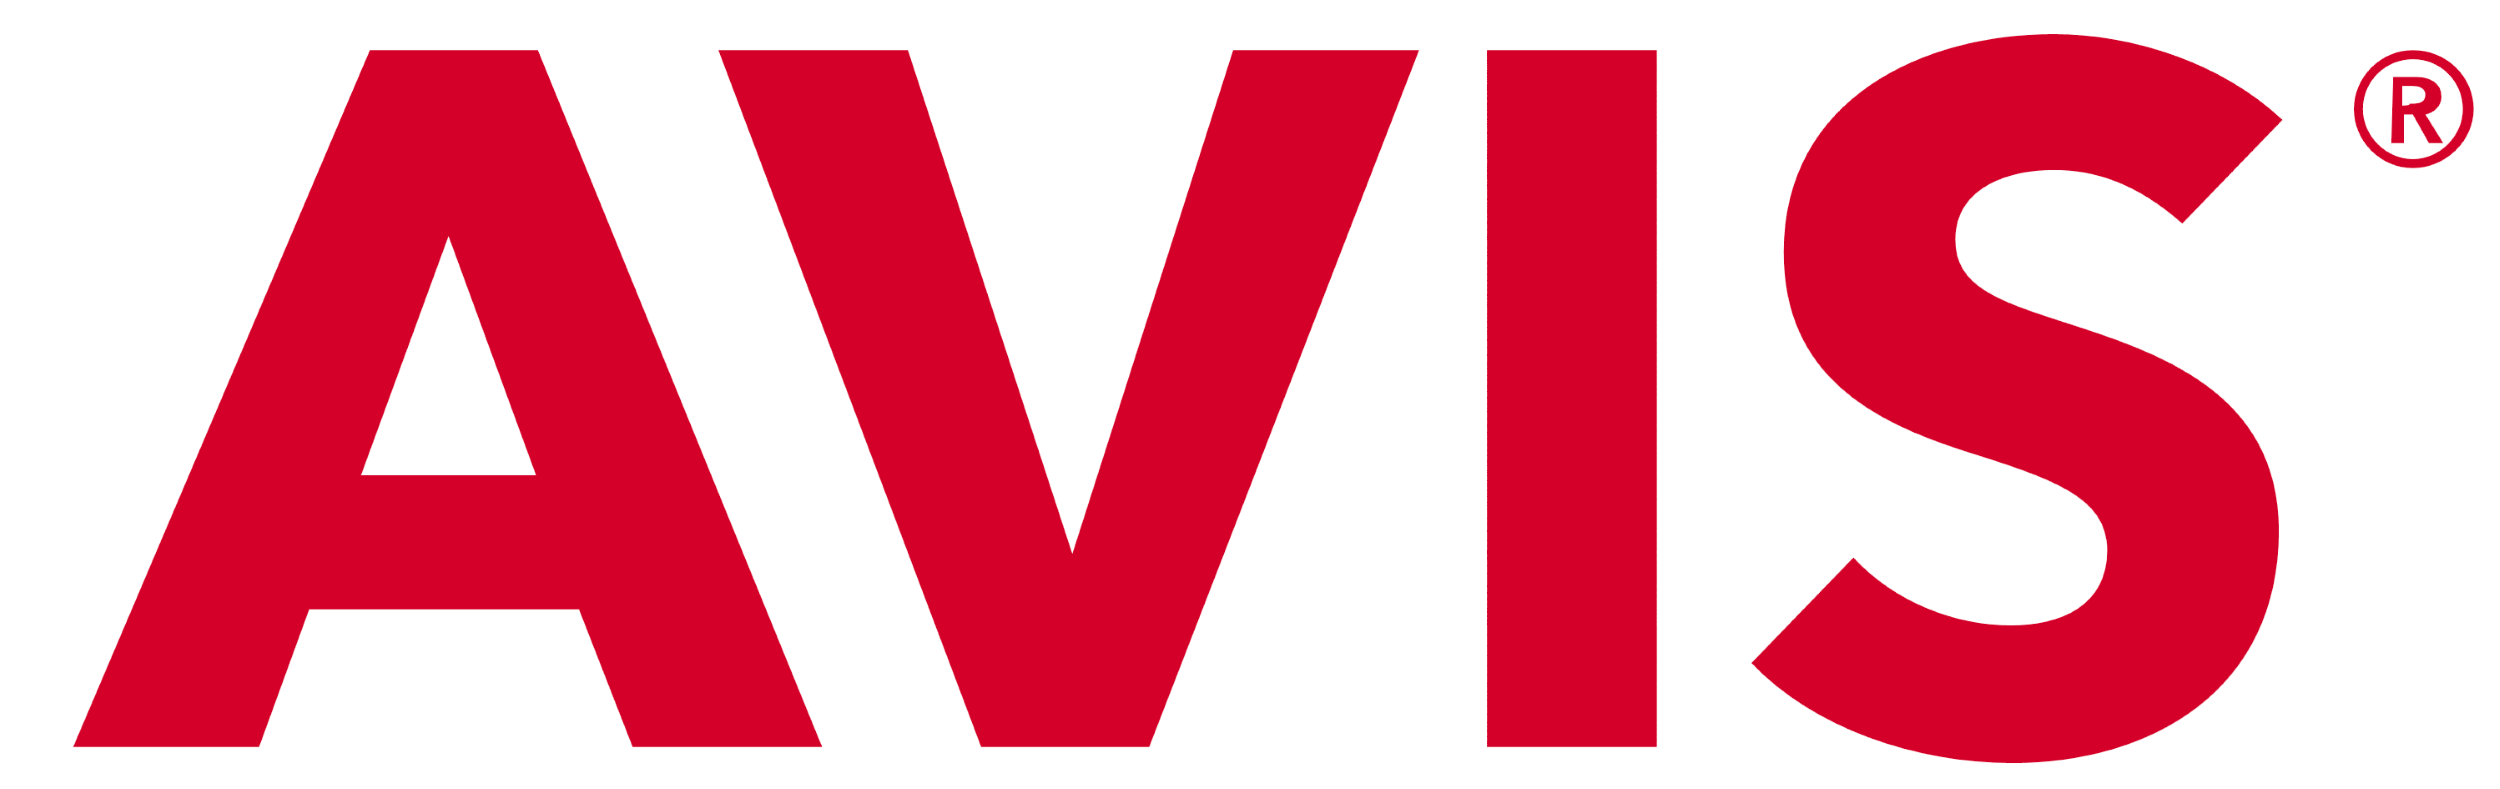 Avis logo, logotype